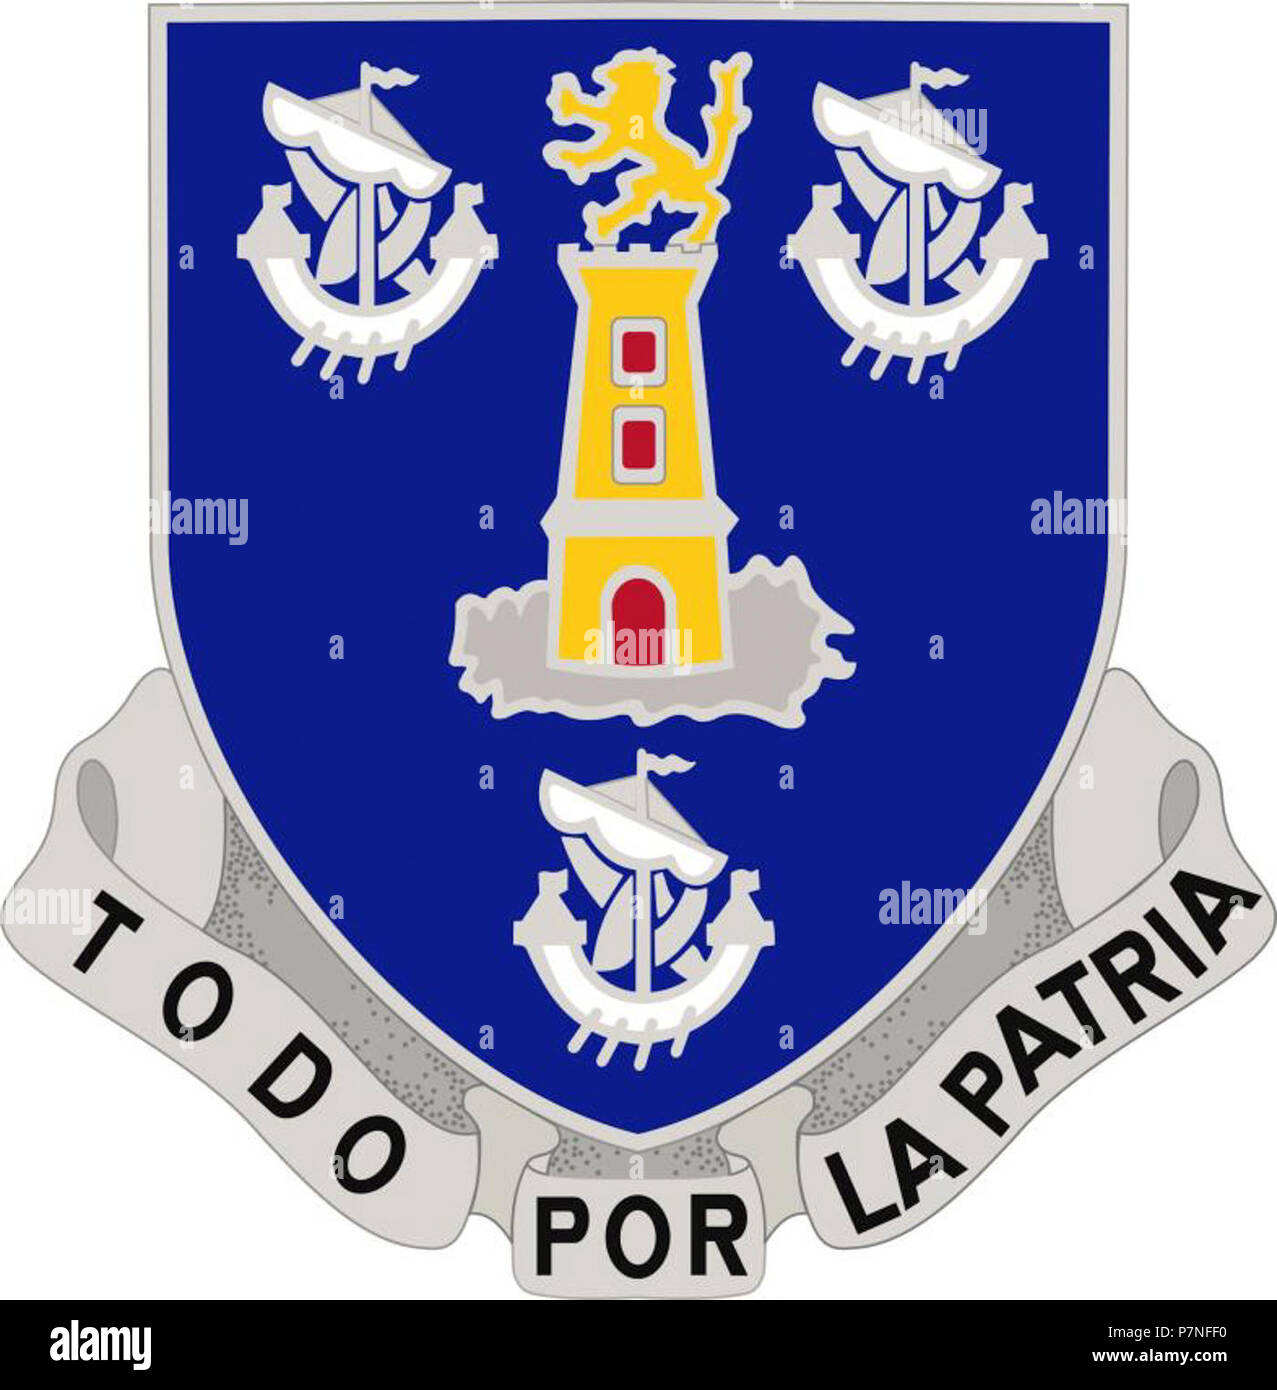 295th-infantry-regiment-distinctive-unit-insignia. Stock Photo